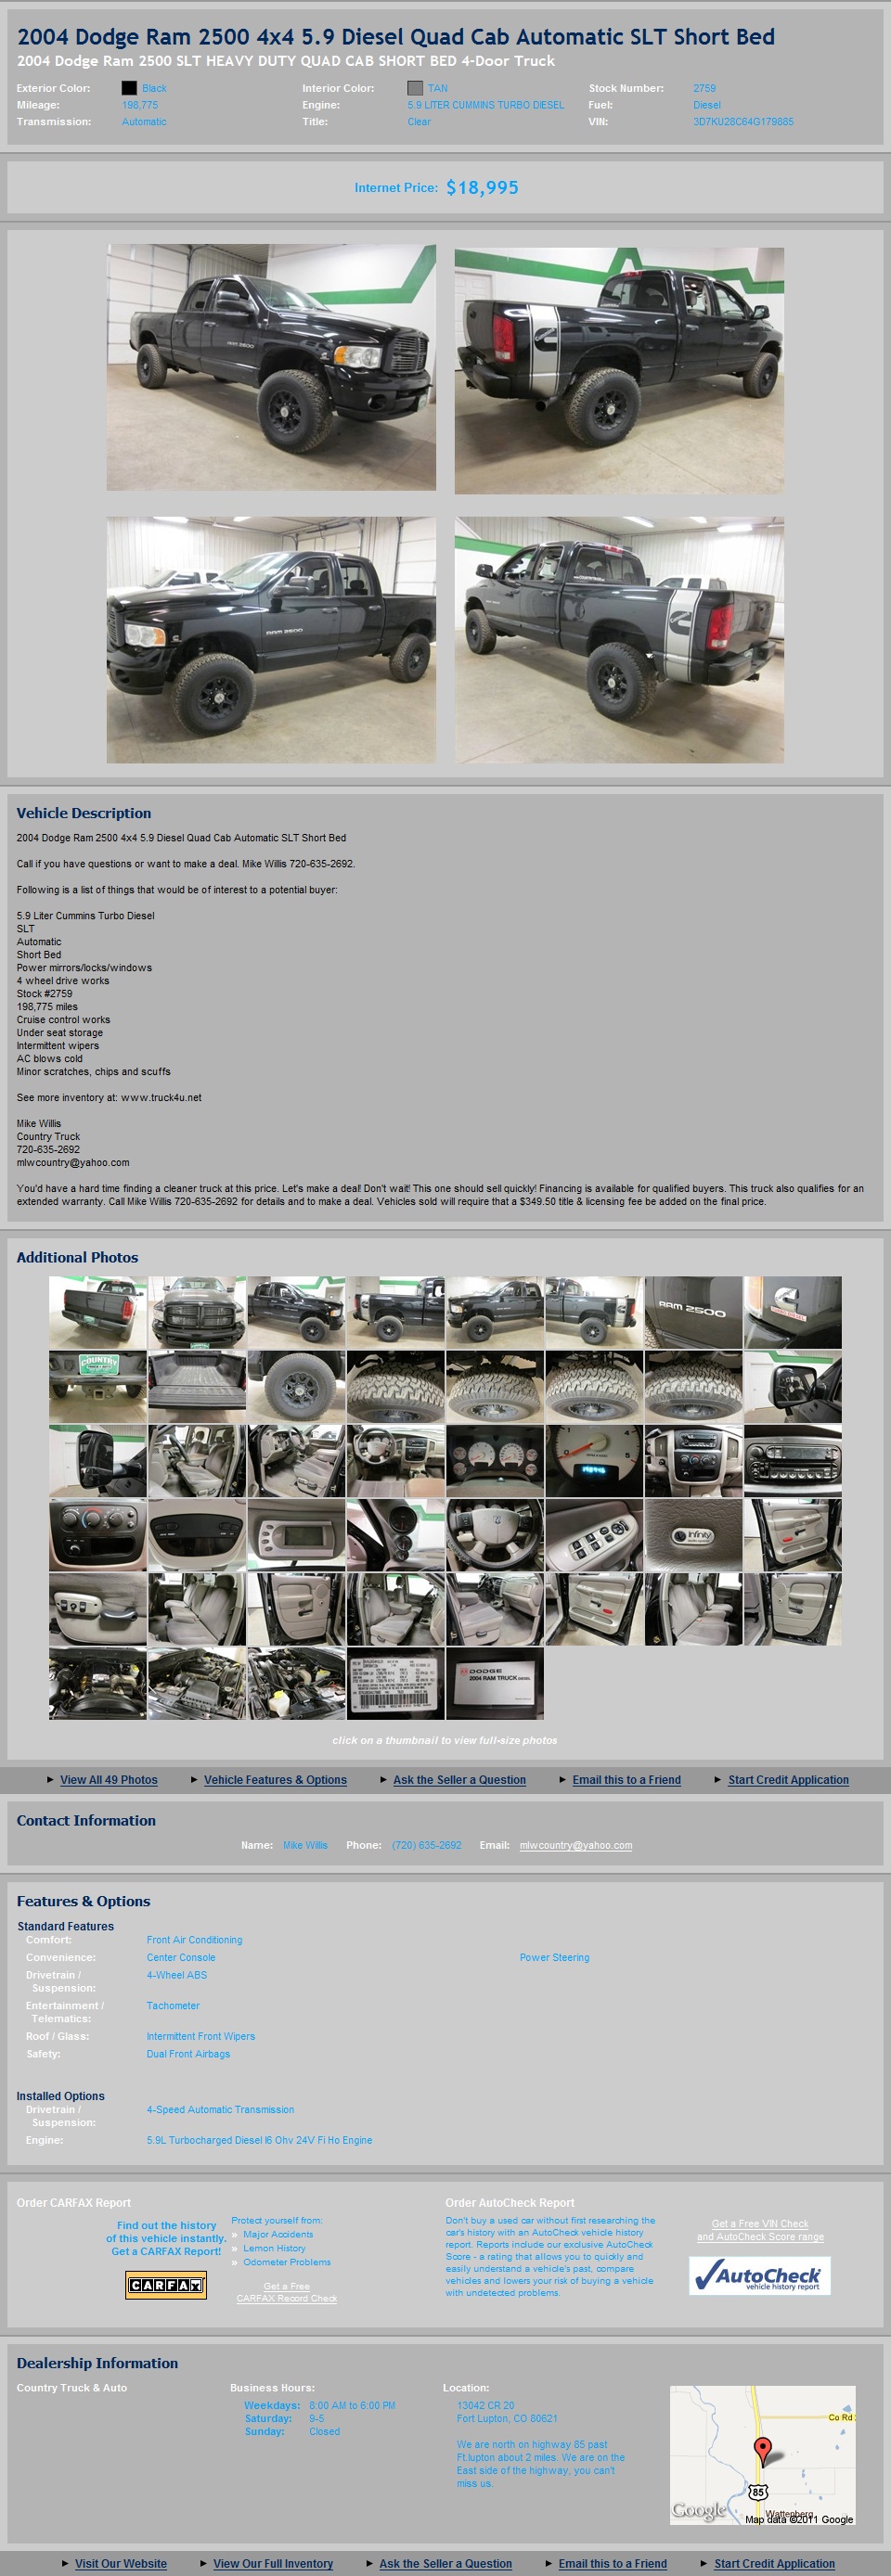 Dodge Ram 2500 SLT Heavy Duty Quad Cab. View Download Wallpaper. 960x2777